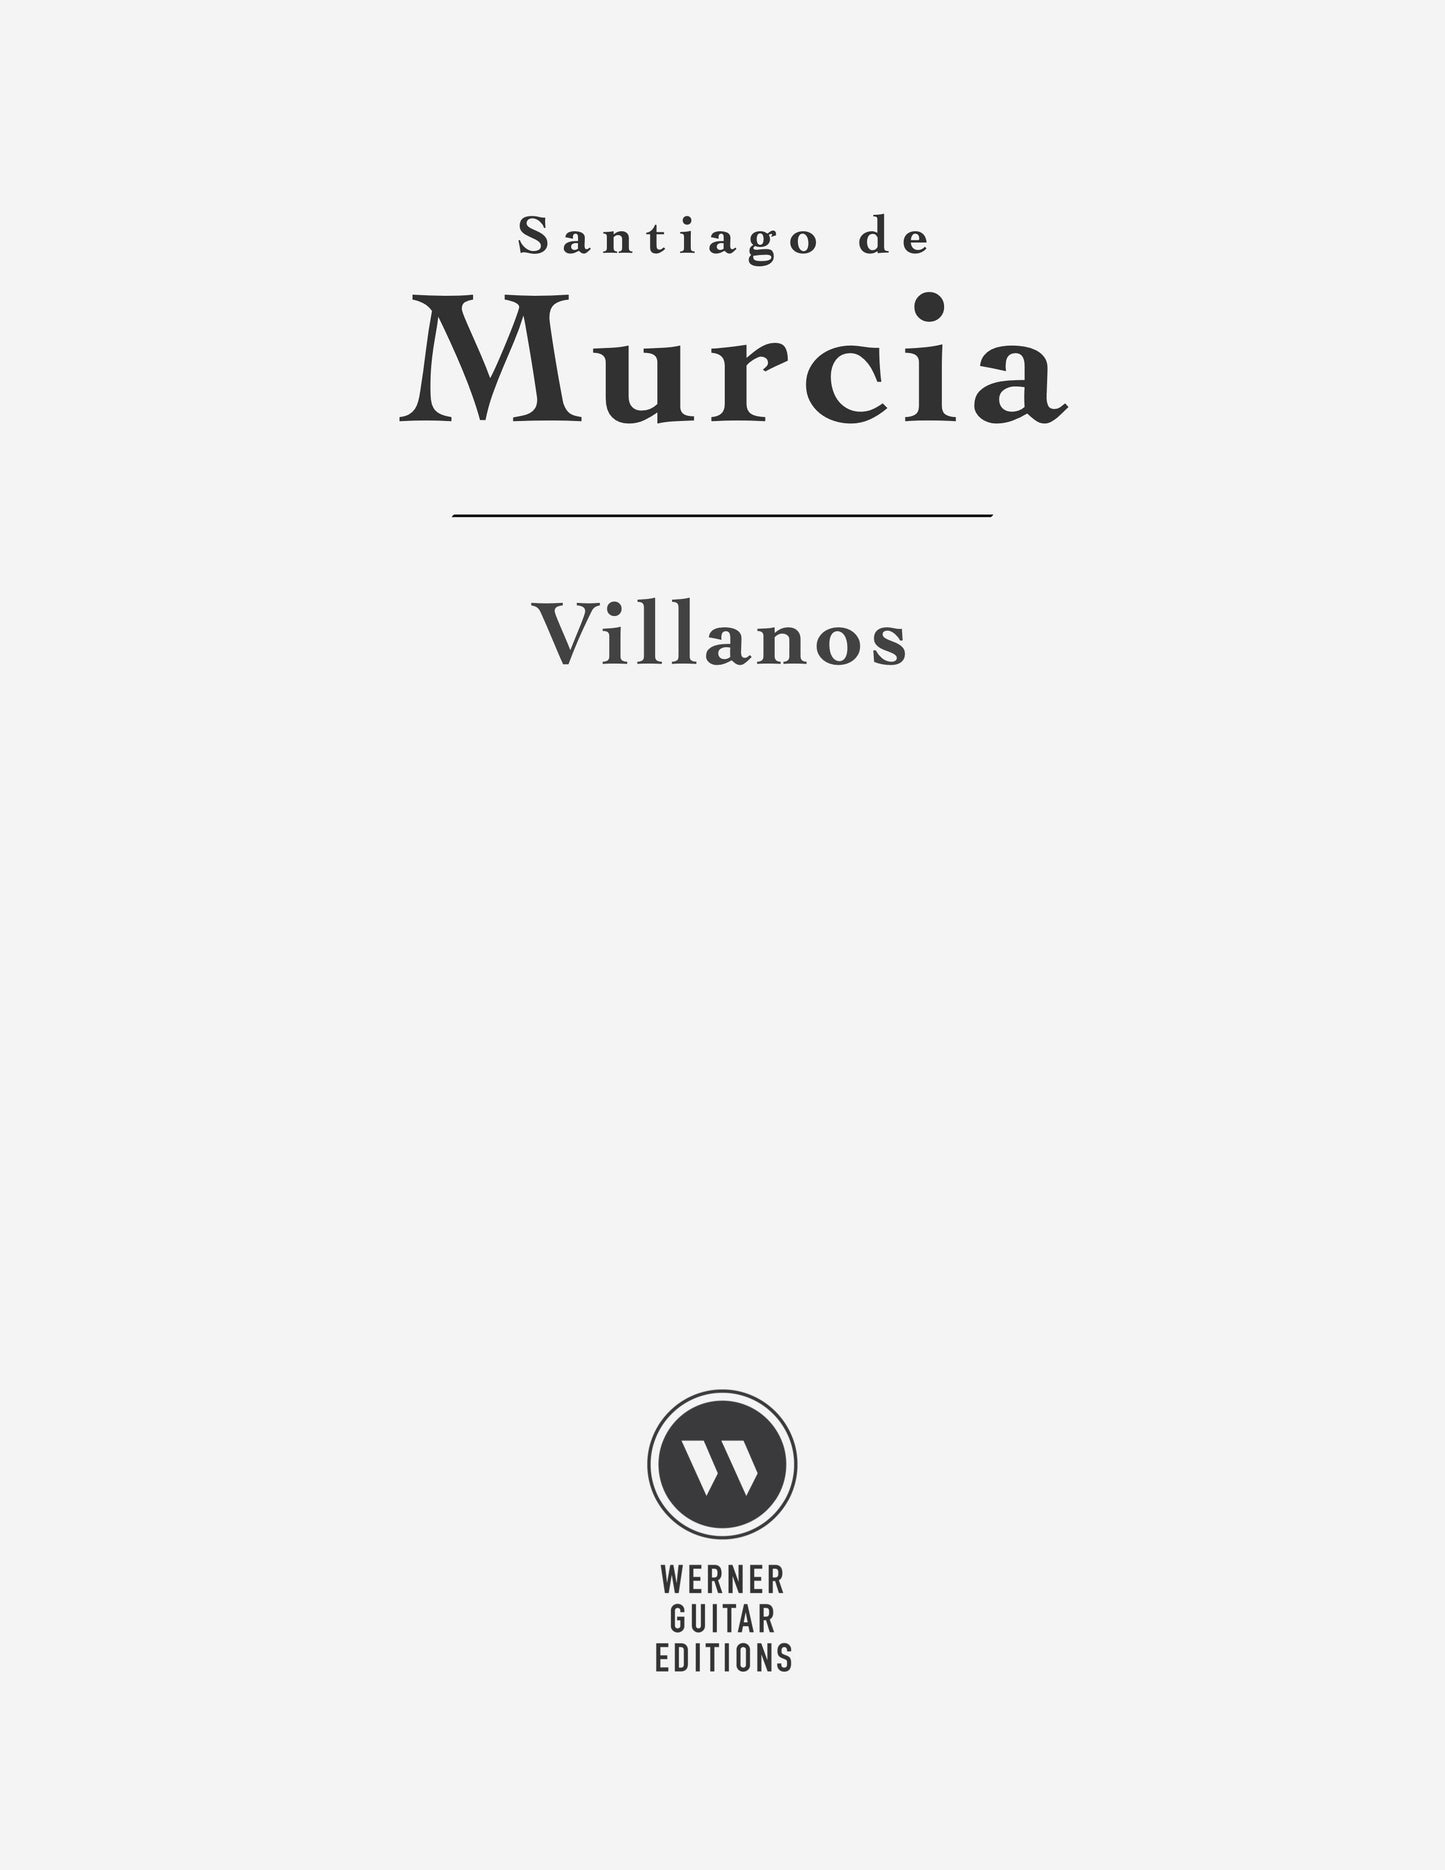 Villanos by Santiago de Murcia (PDF Sheet Music and Tab)